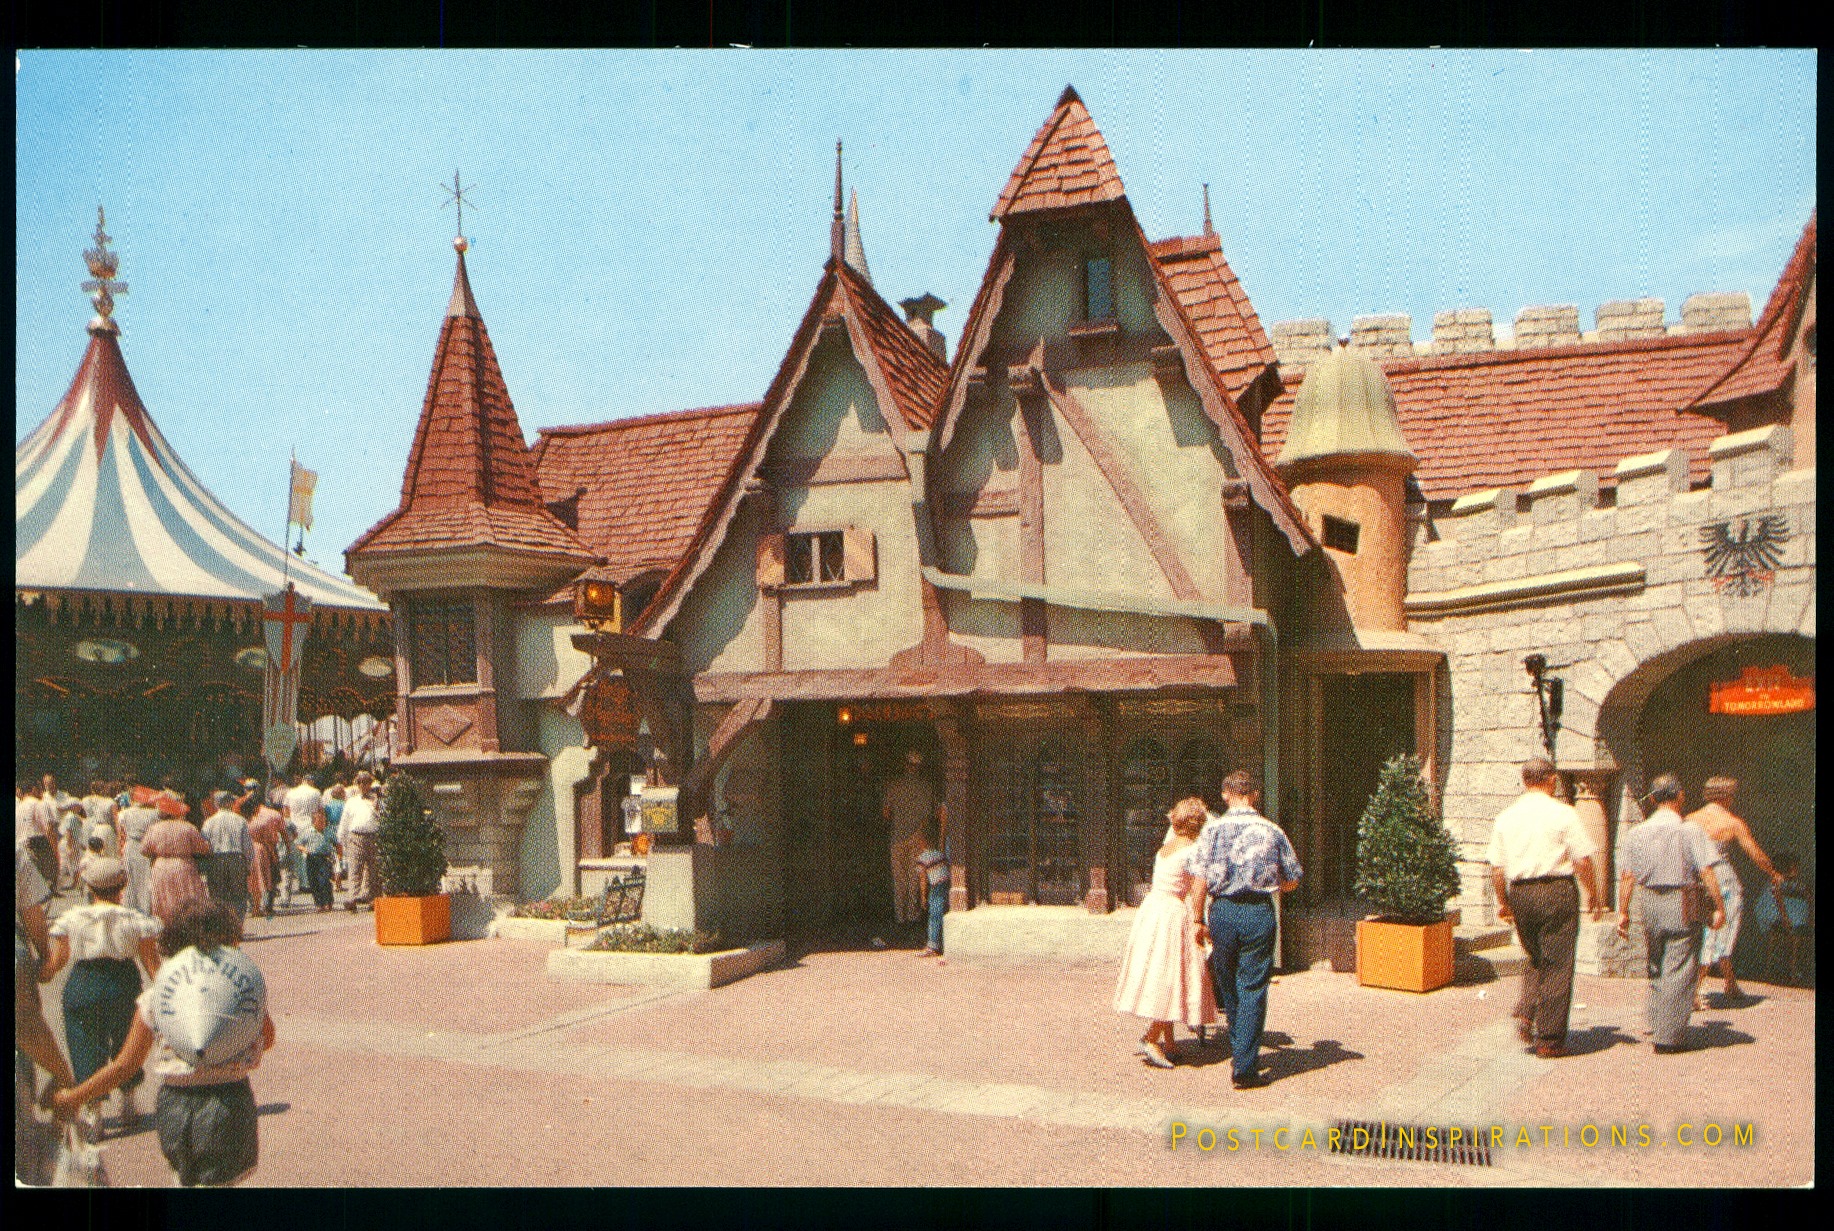 Merlin's Magic Shop at Disneyland (Postcard)